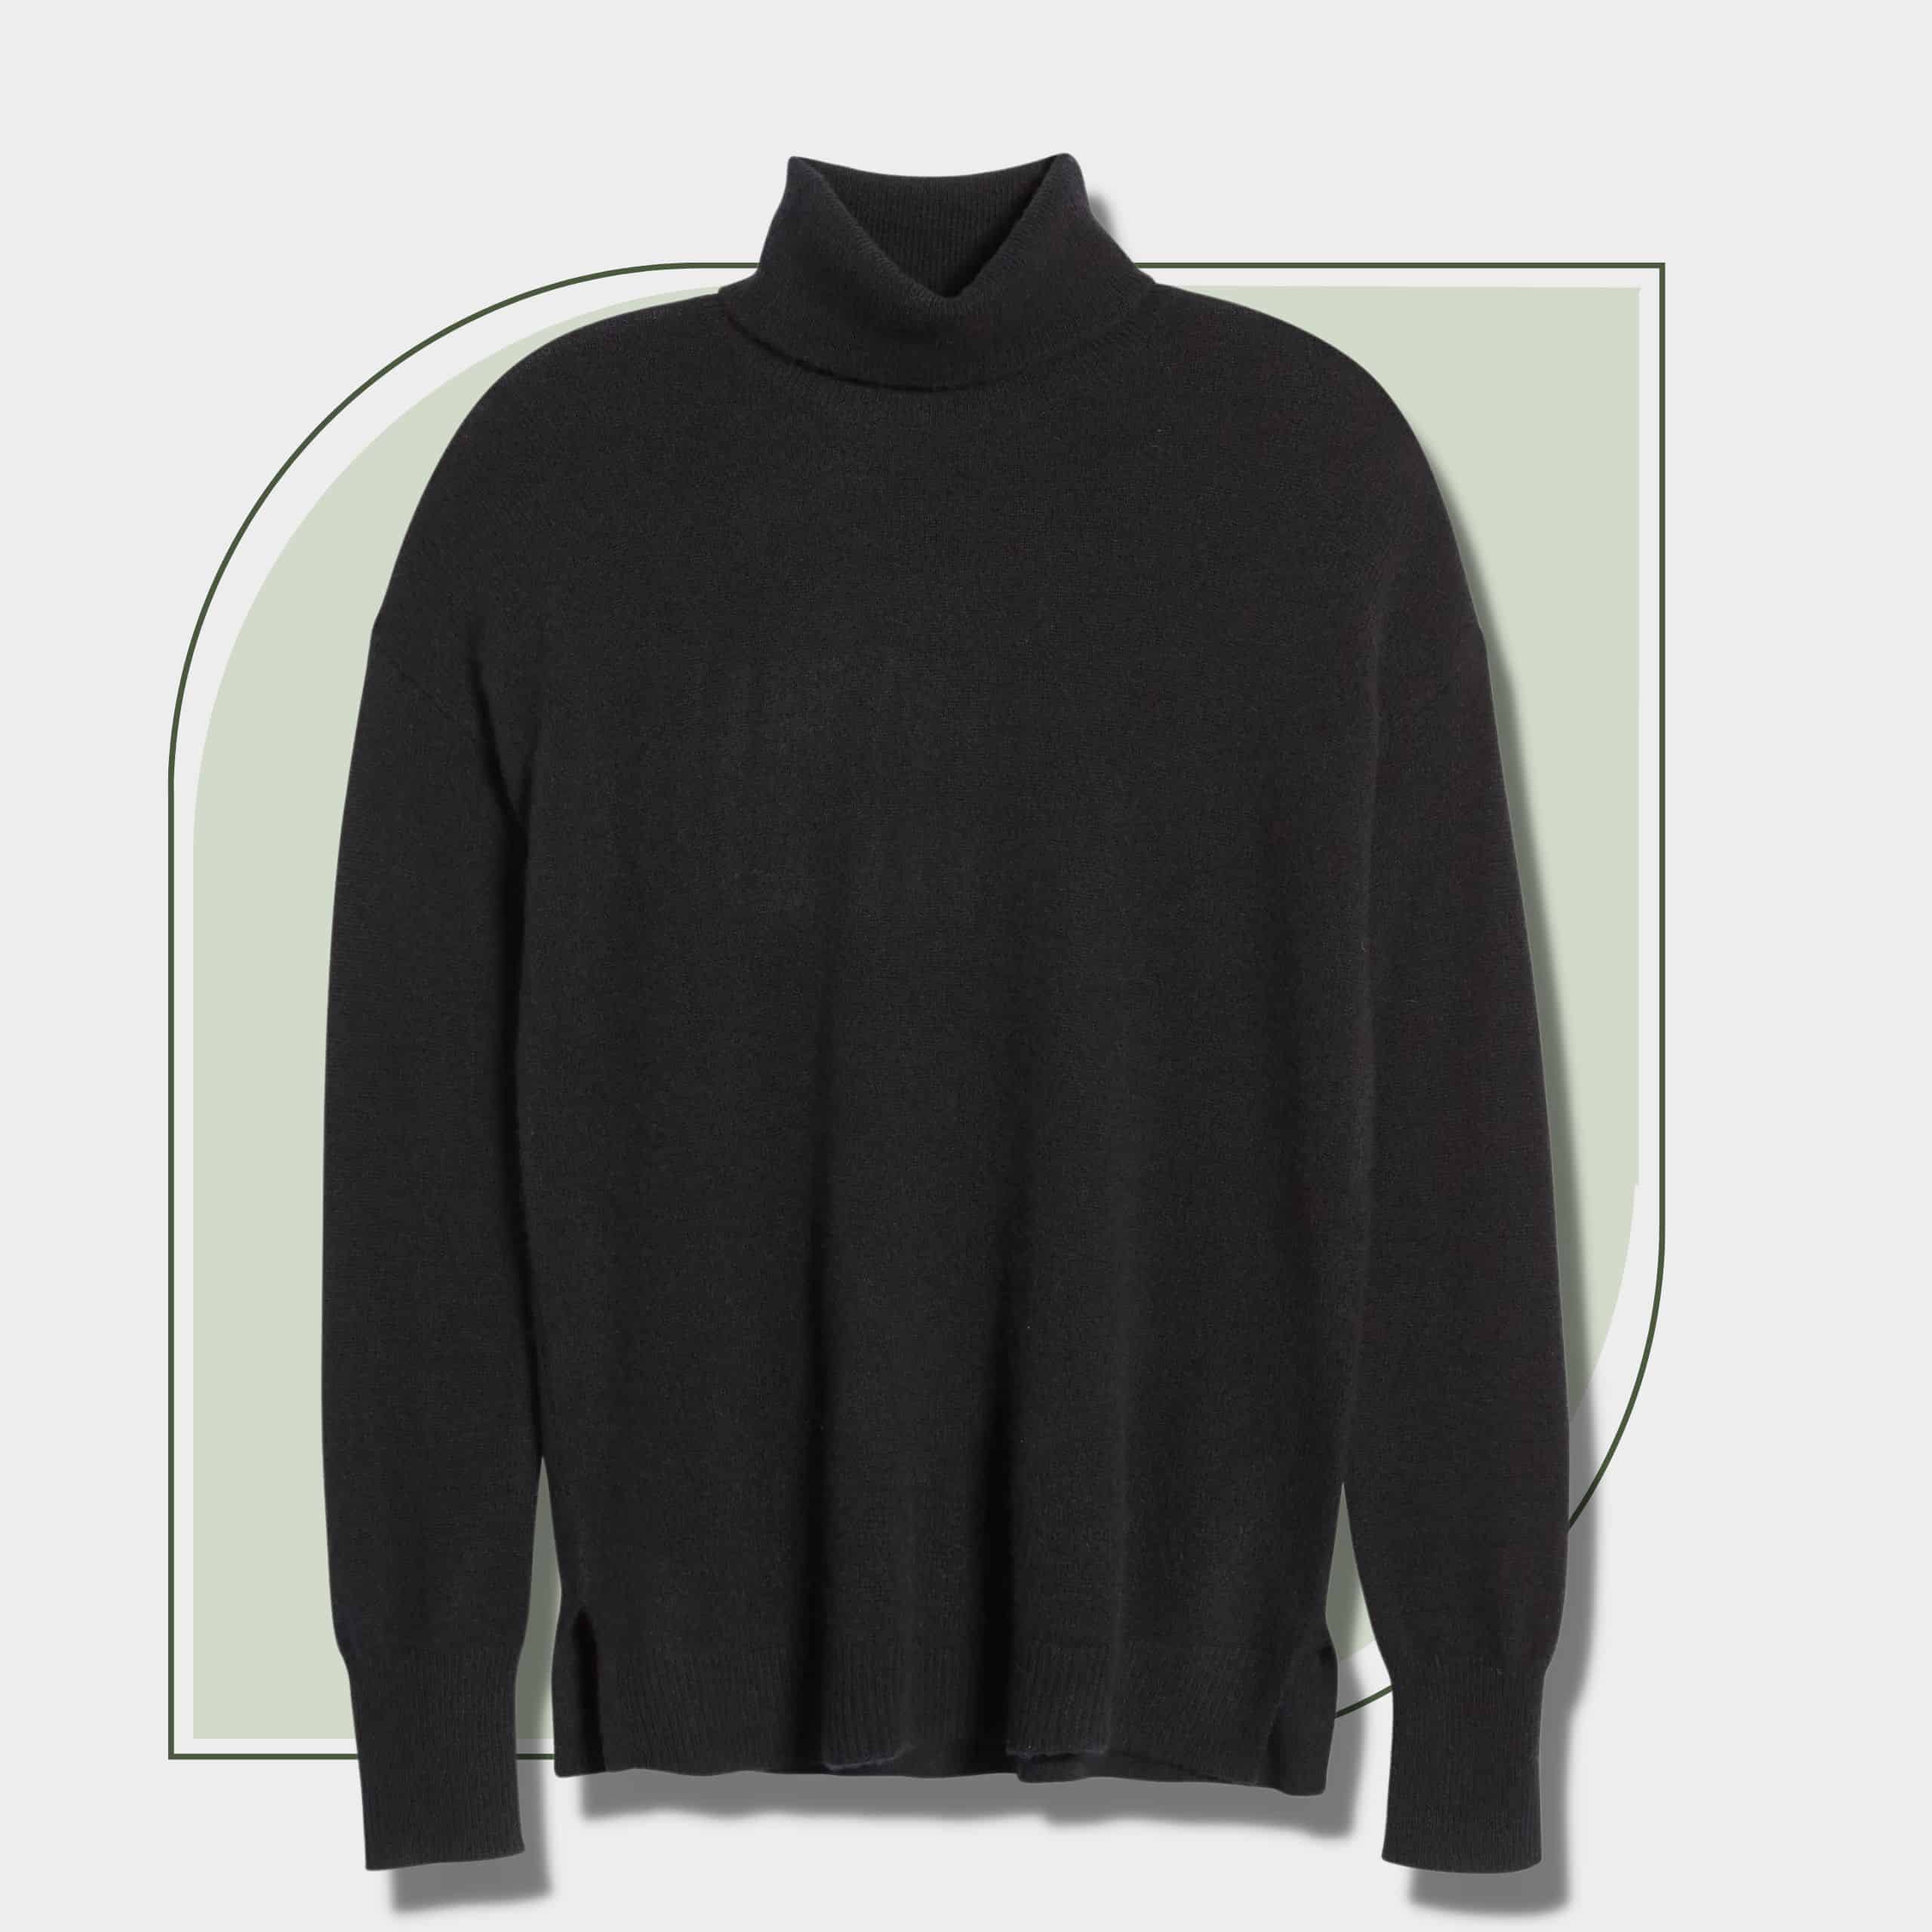 Effortless Chic Winter Capsule Wardrobe- Cashmere Turtleneck Sweater